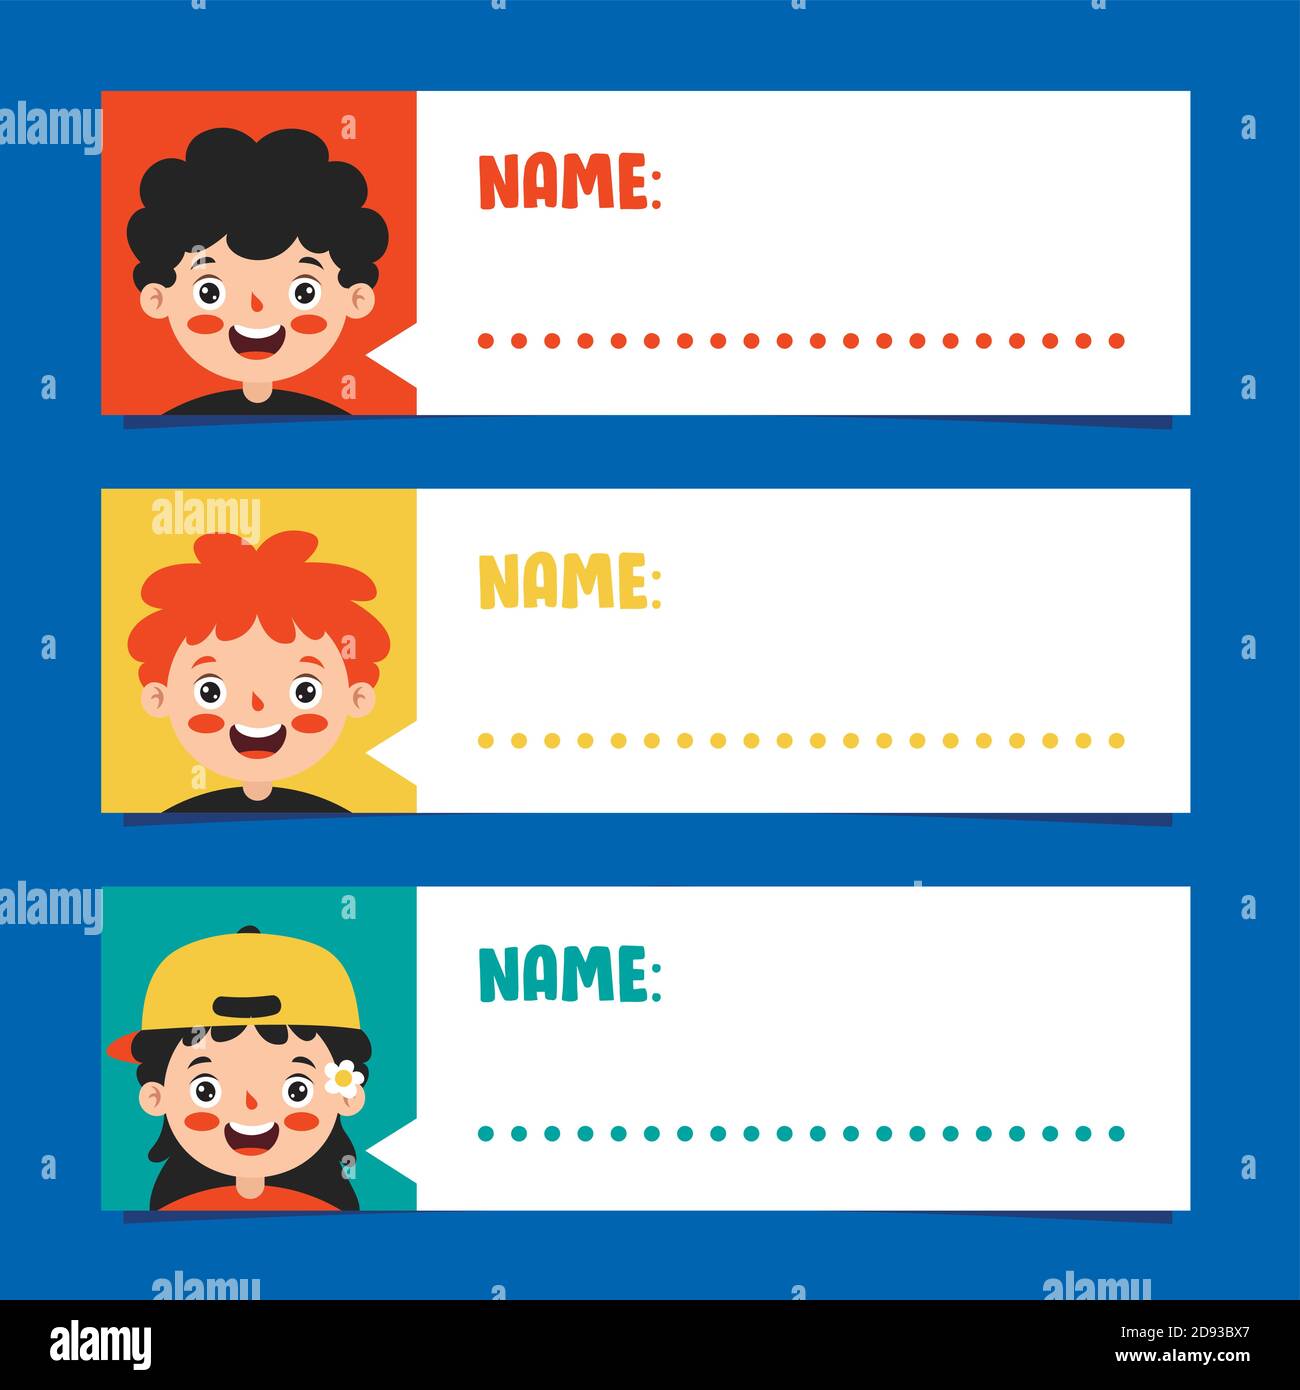 Name Tags For Cartoon School Children Stock Vector Image & Art - Alamy